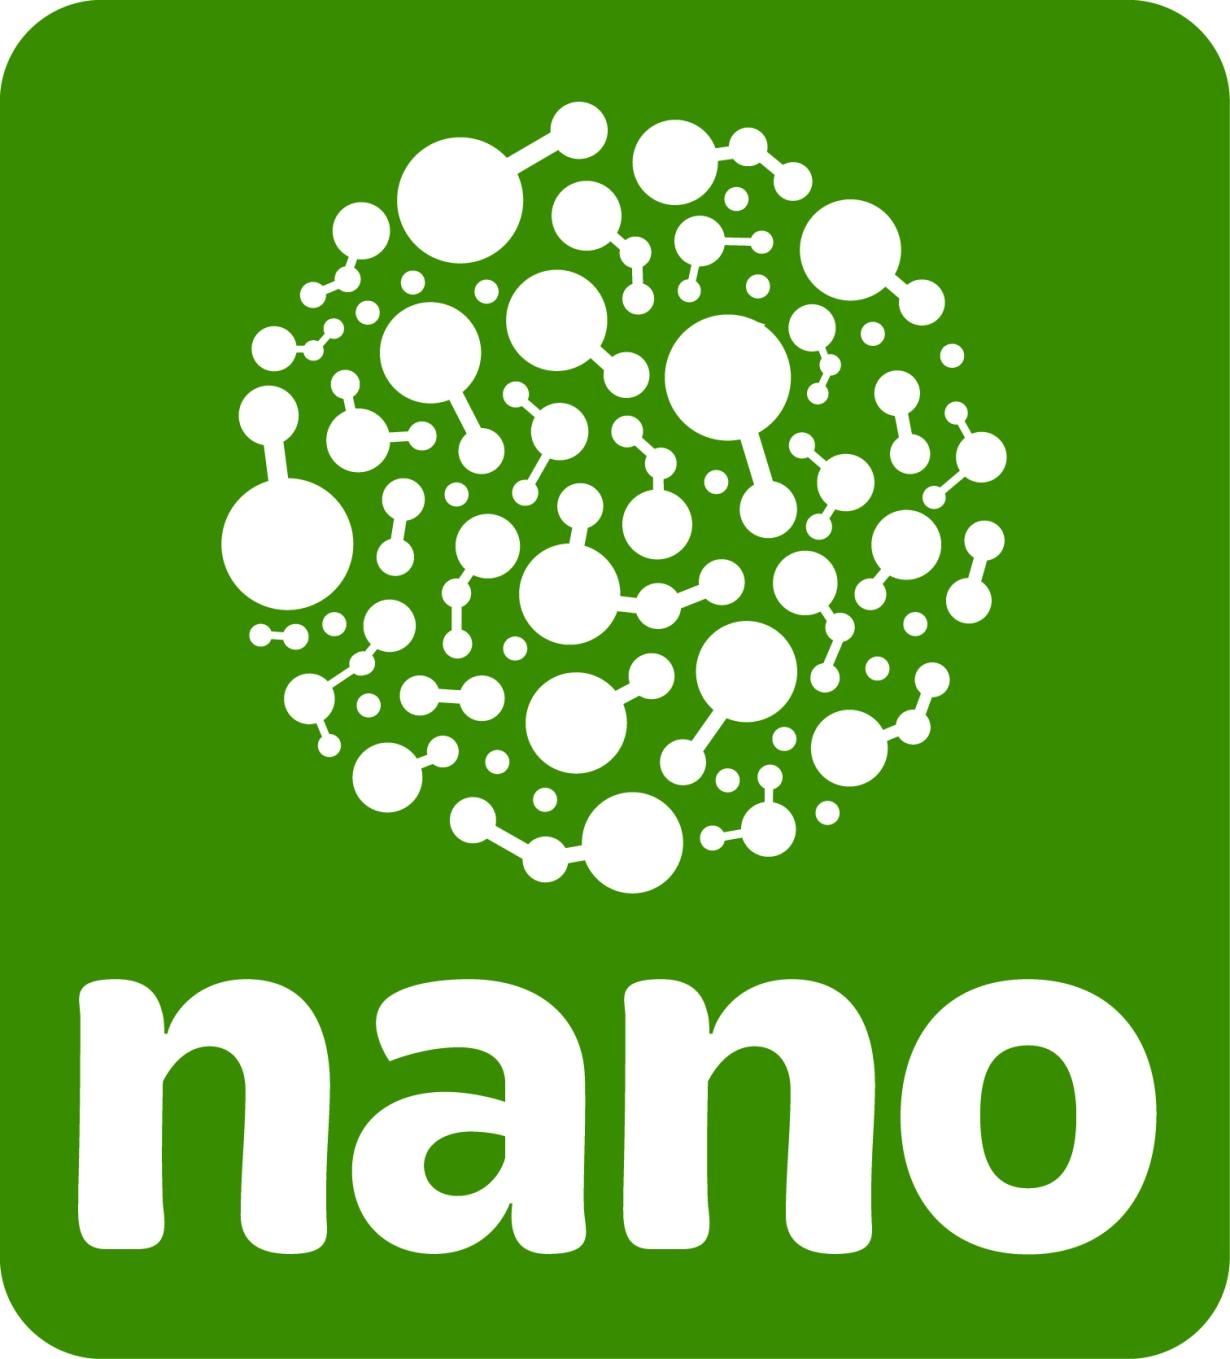 Nano exhibition logo